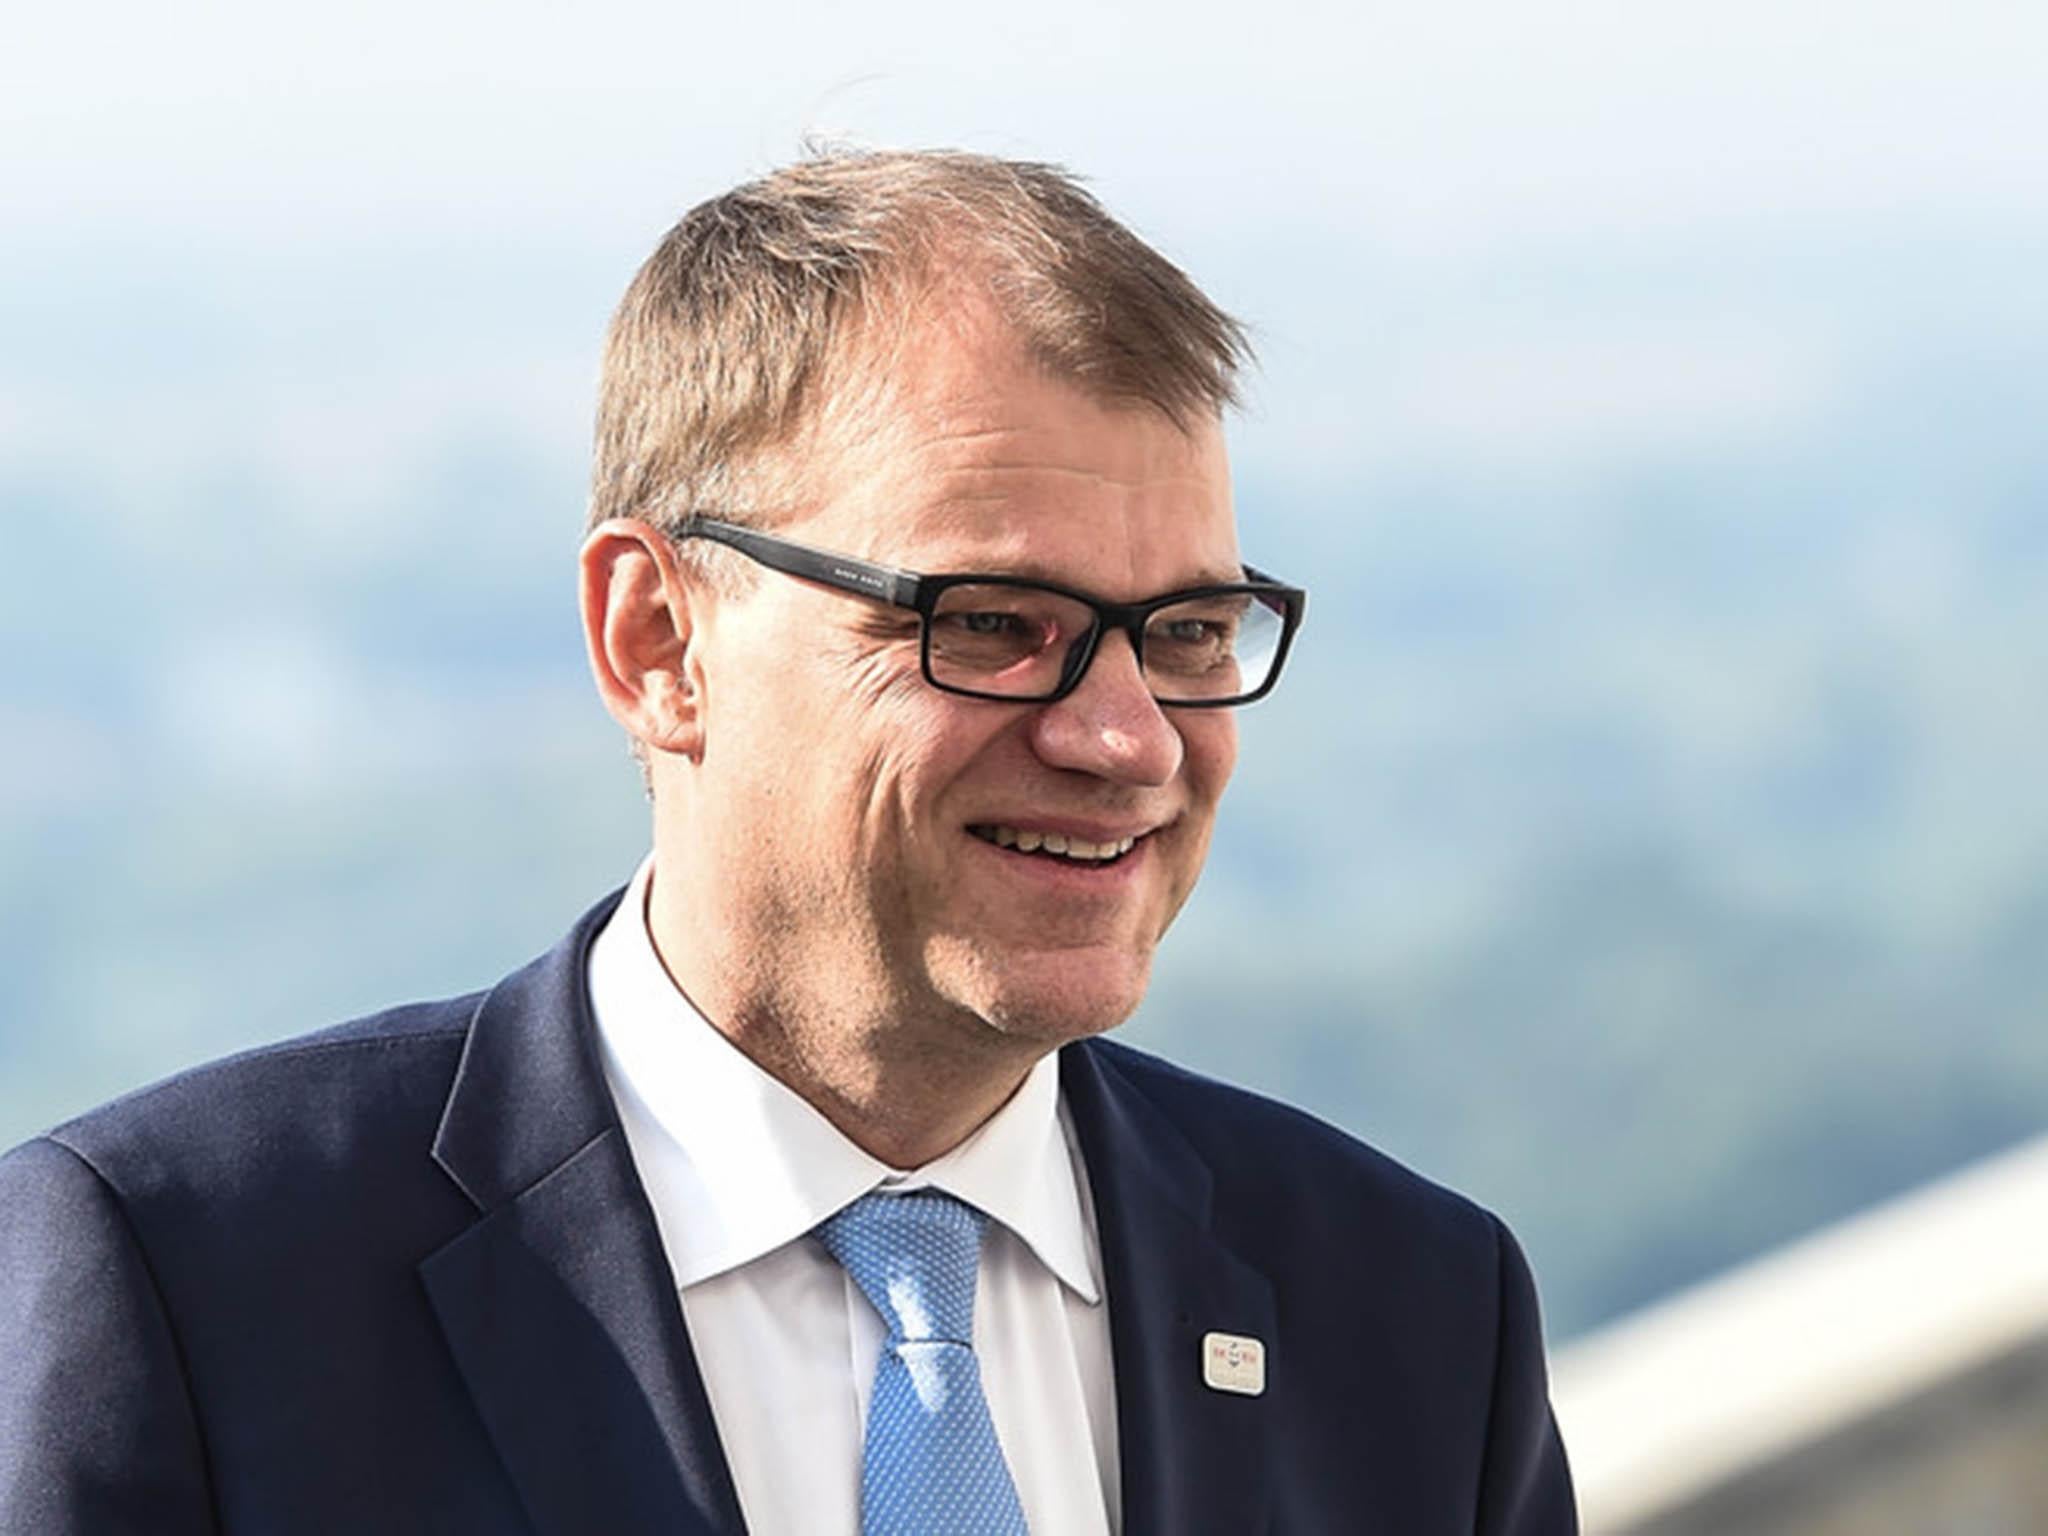 Finnish PM Juha Sipila – the man behind the plan